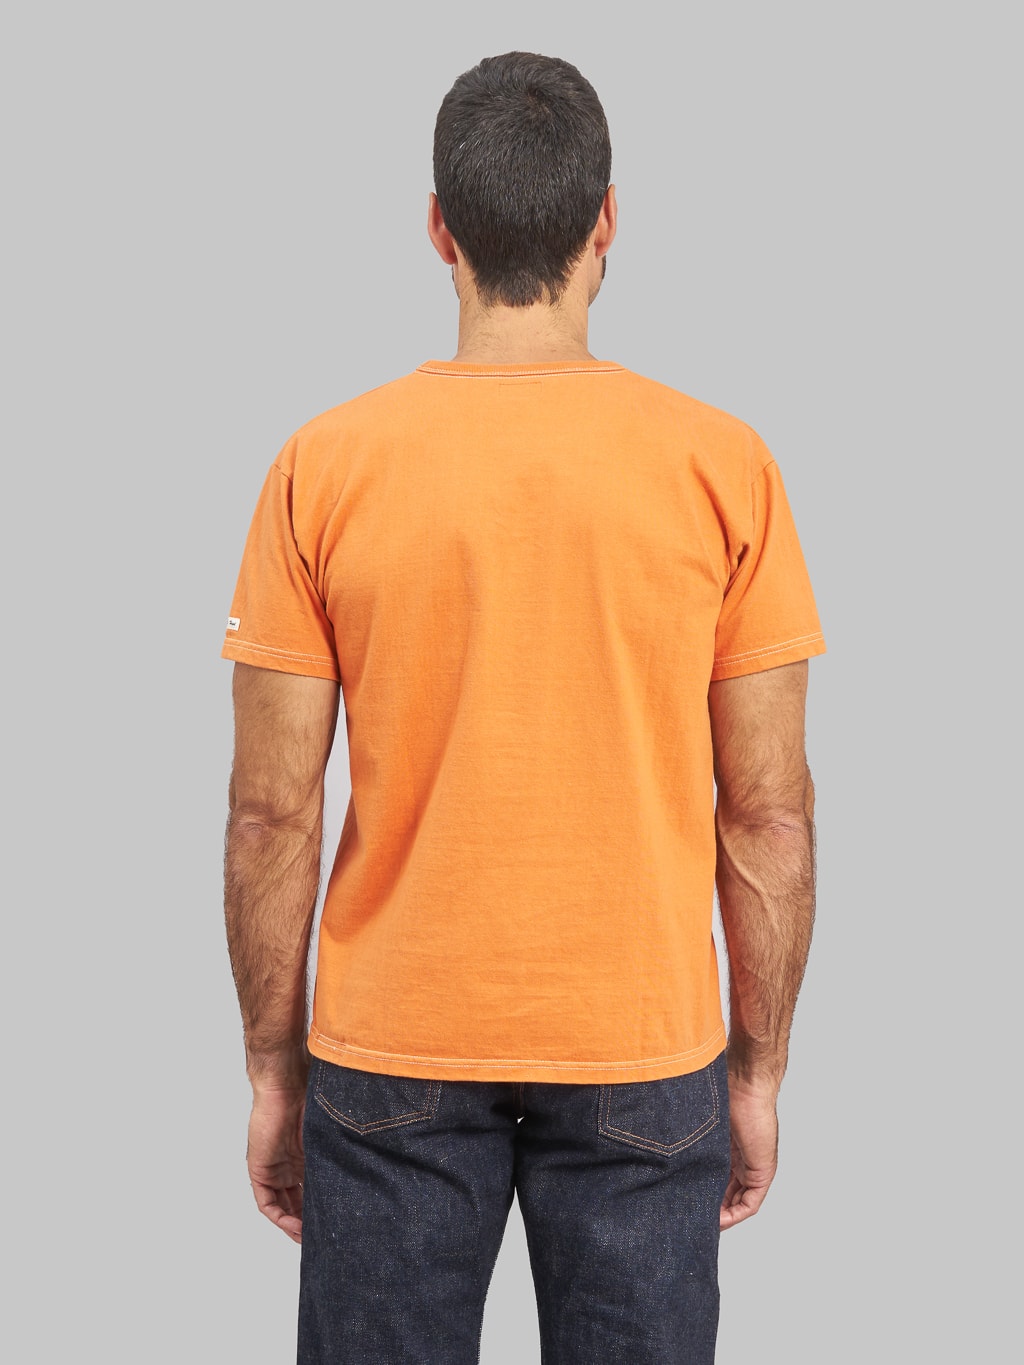 The Flat Head Loopwheeled Heavyweight Plain TShirt Dark Orange model back fit